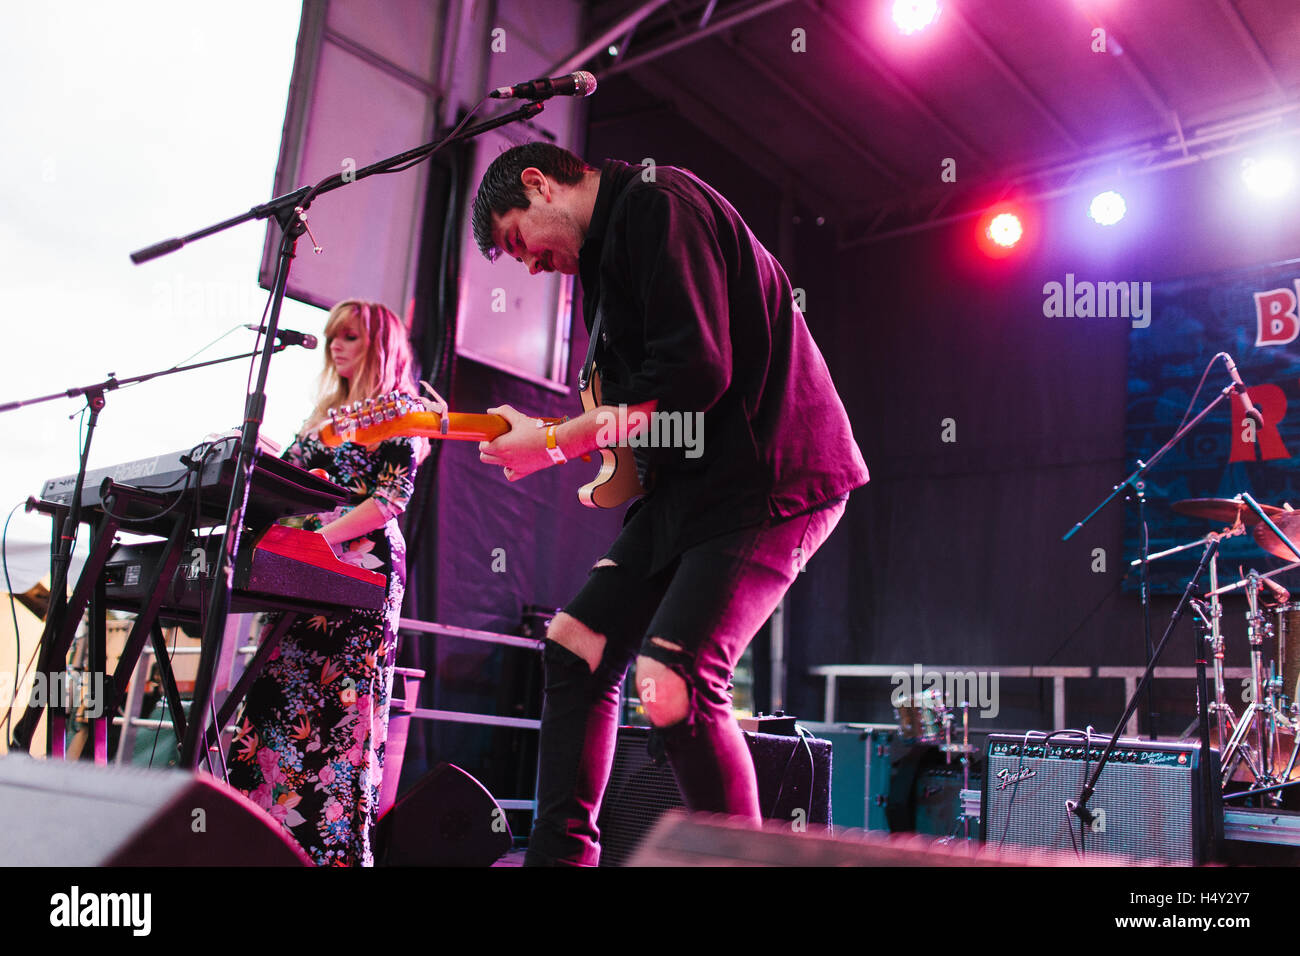 Smokey Brights performs at Bumbershoot Festival on September 5, 2015 in Seattle, Washington. Stock Photo